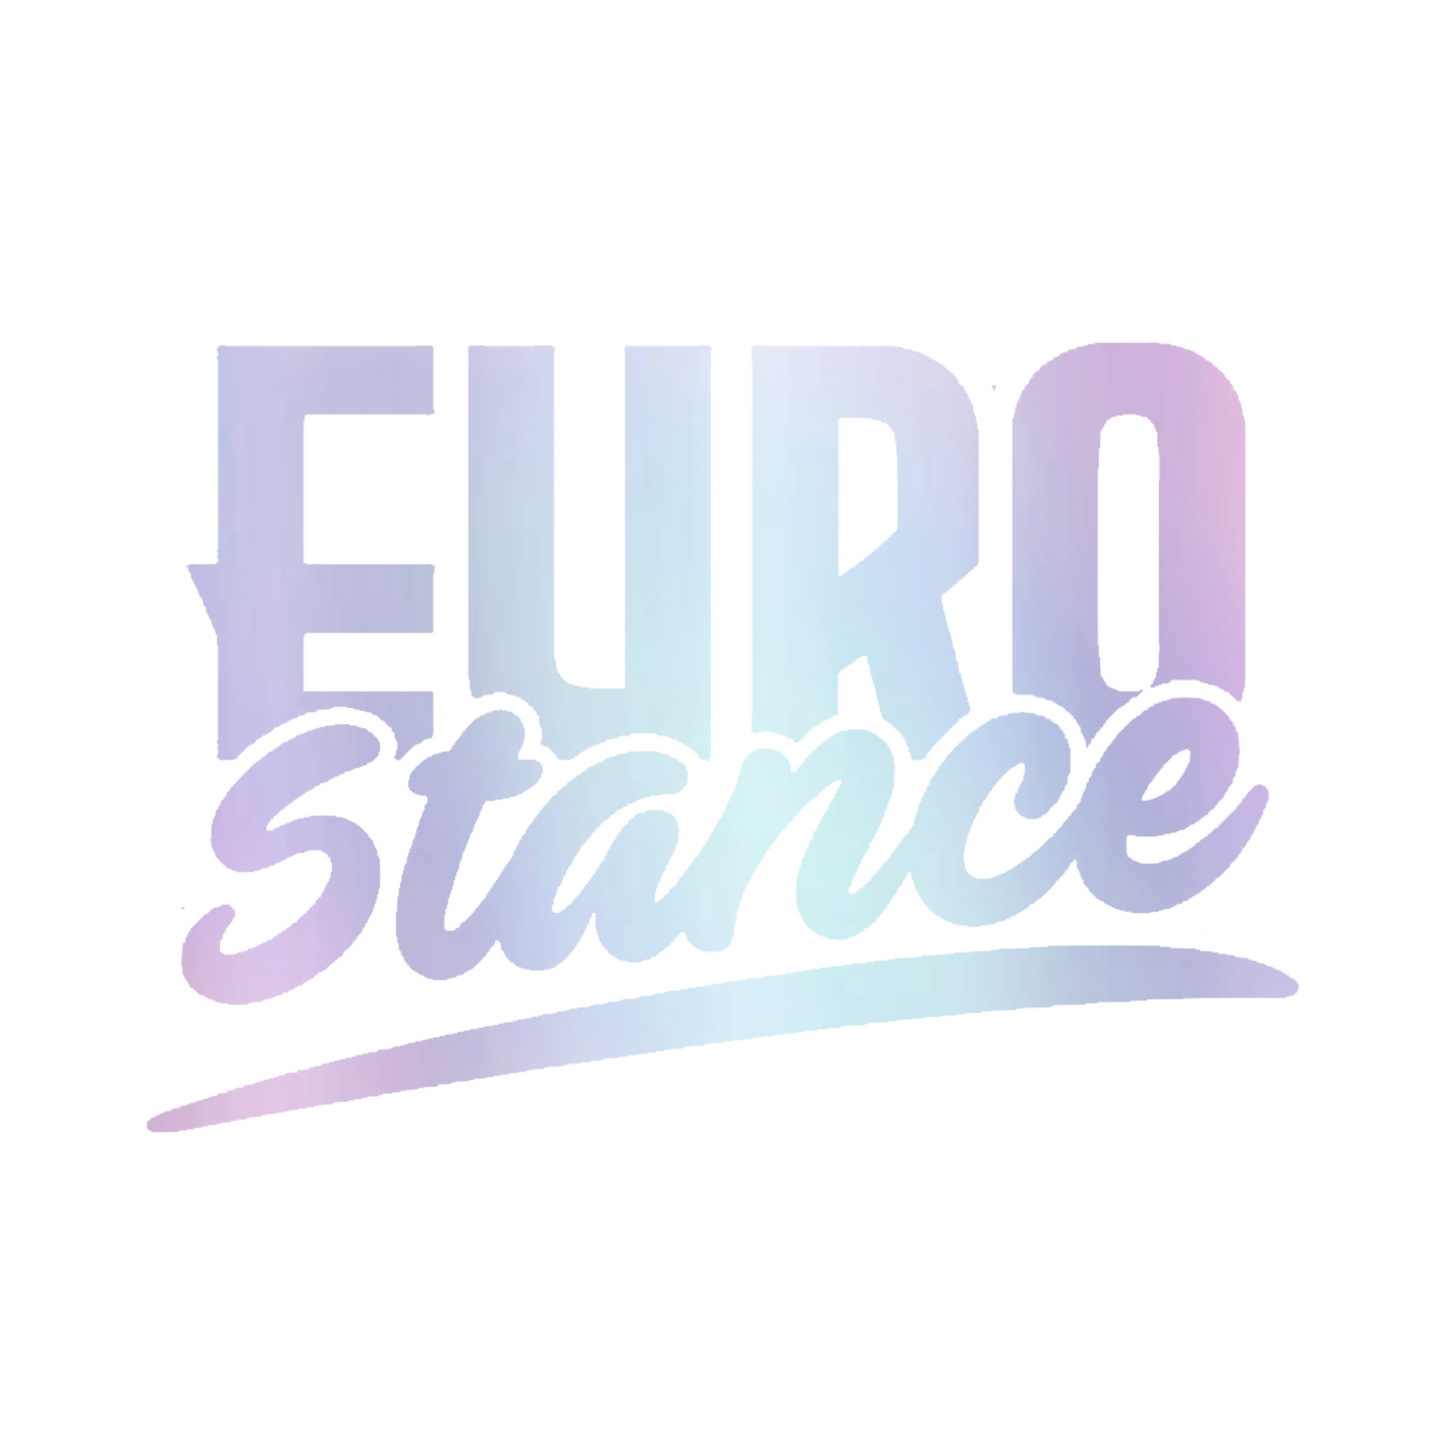 EuroStance Classic Vinyl sticker - 100mm wide (small)